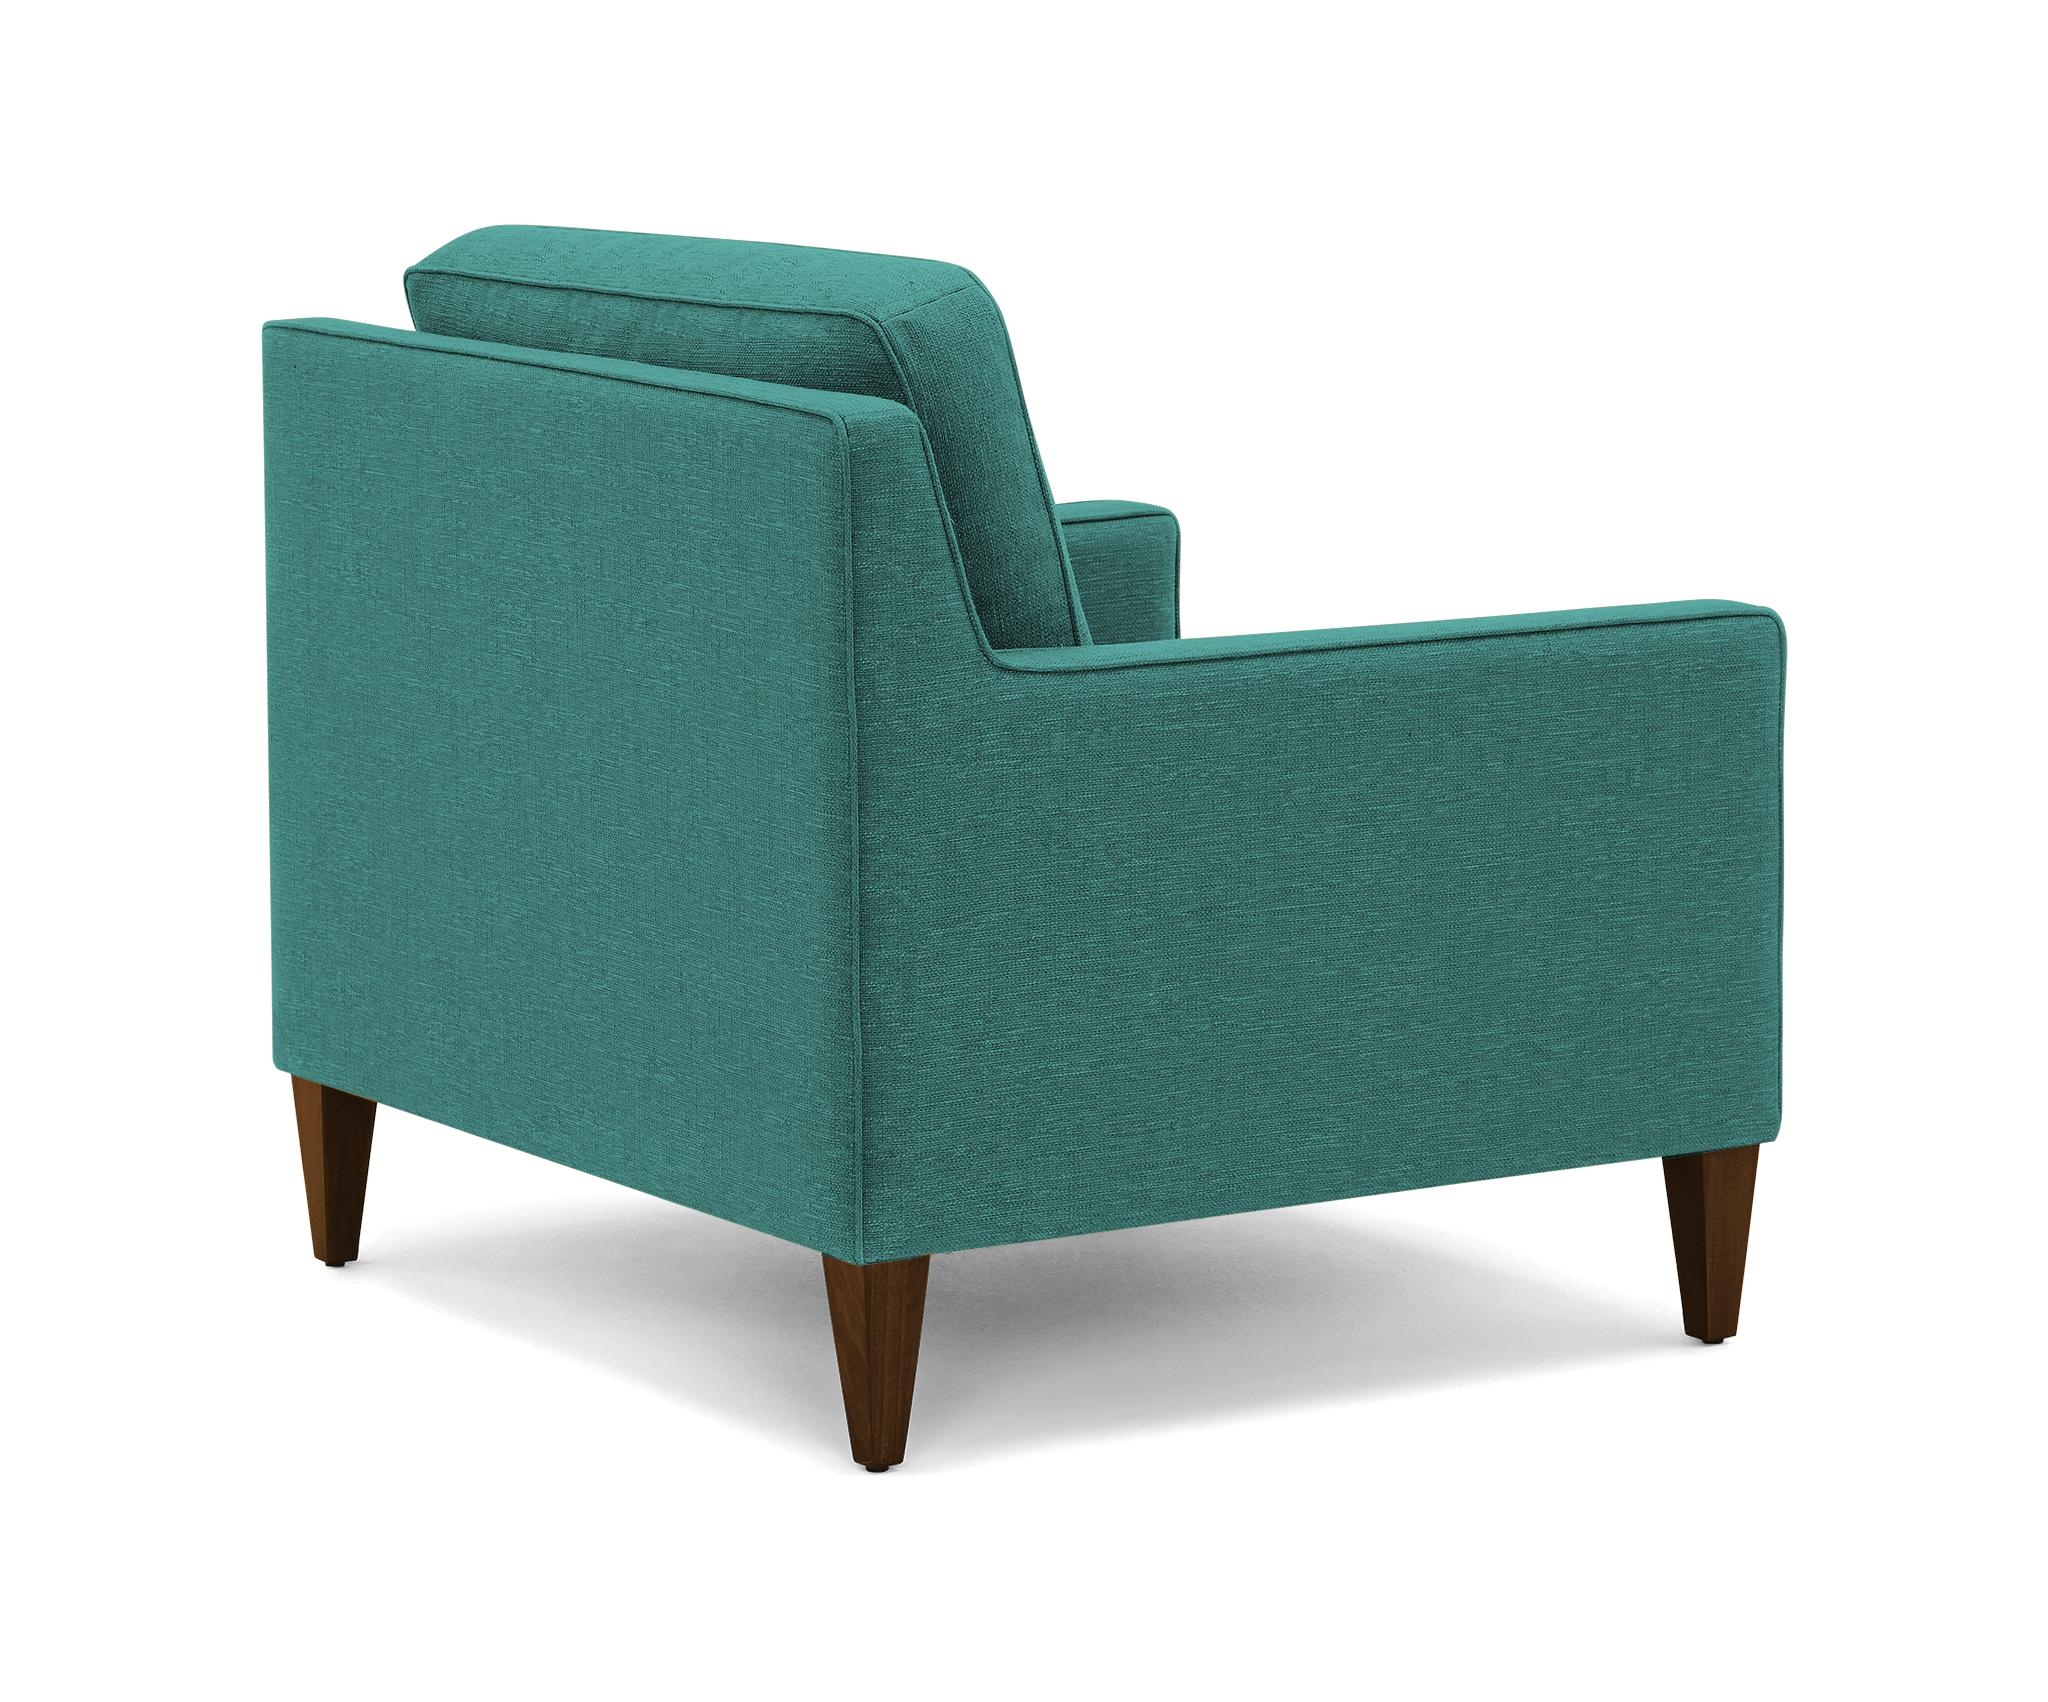 Green Levi Mid Century Modern Chair - Essence Aqua - Mocha - Image 3